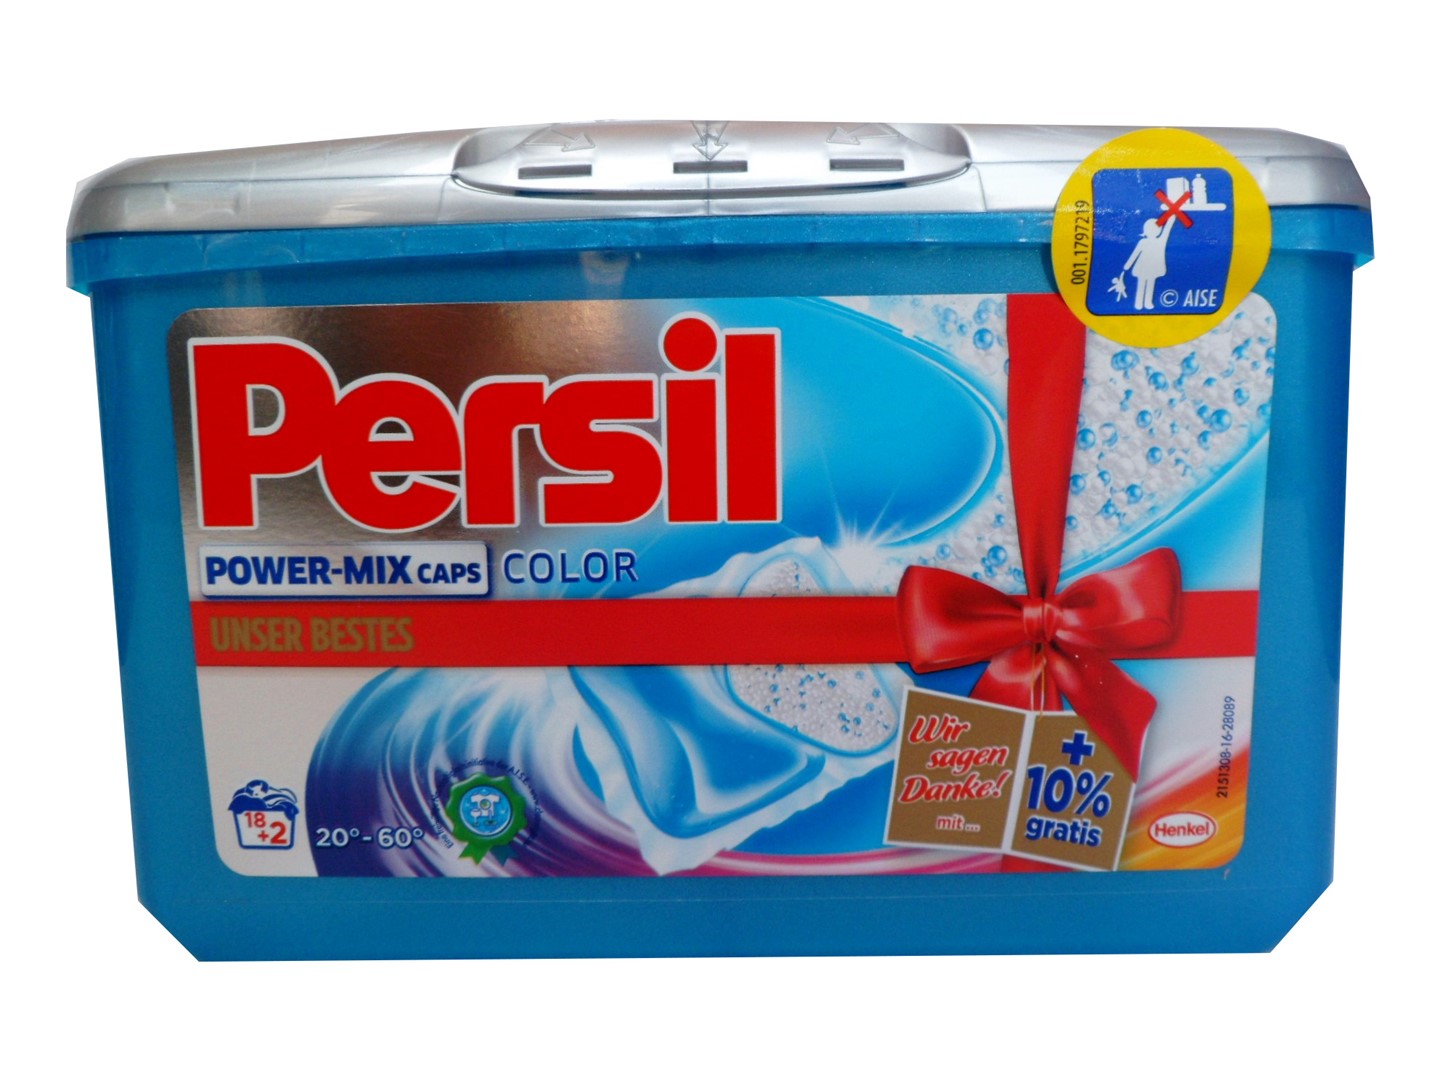 Persil Power Mix Color Kaps 18+2 470g